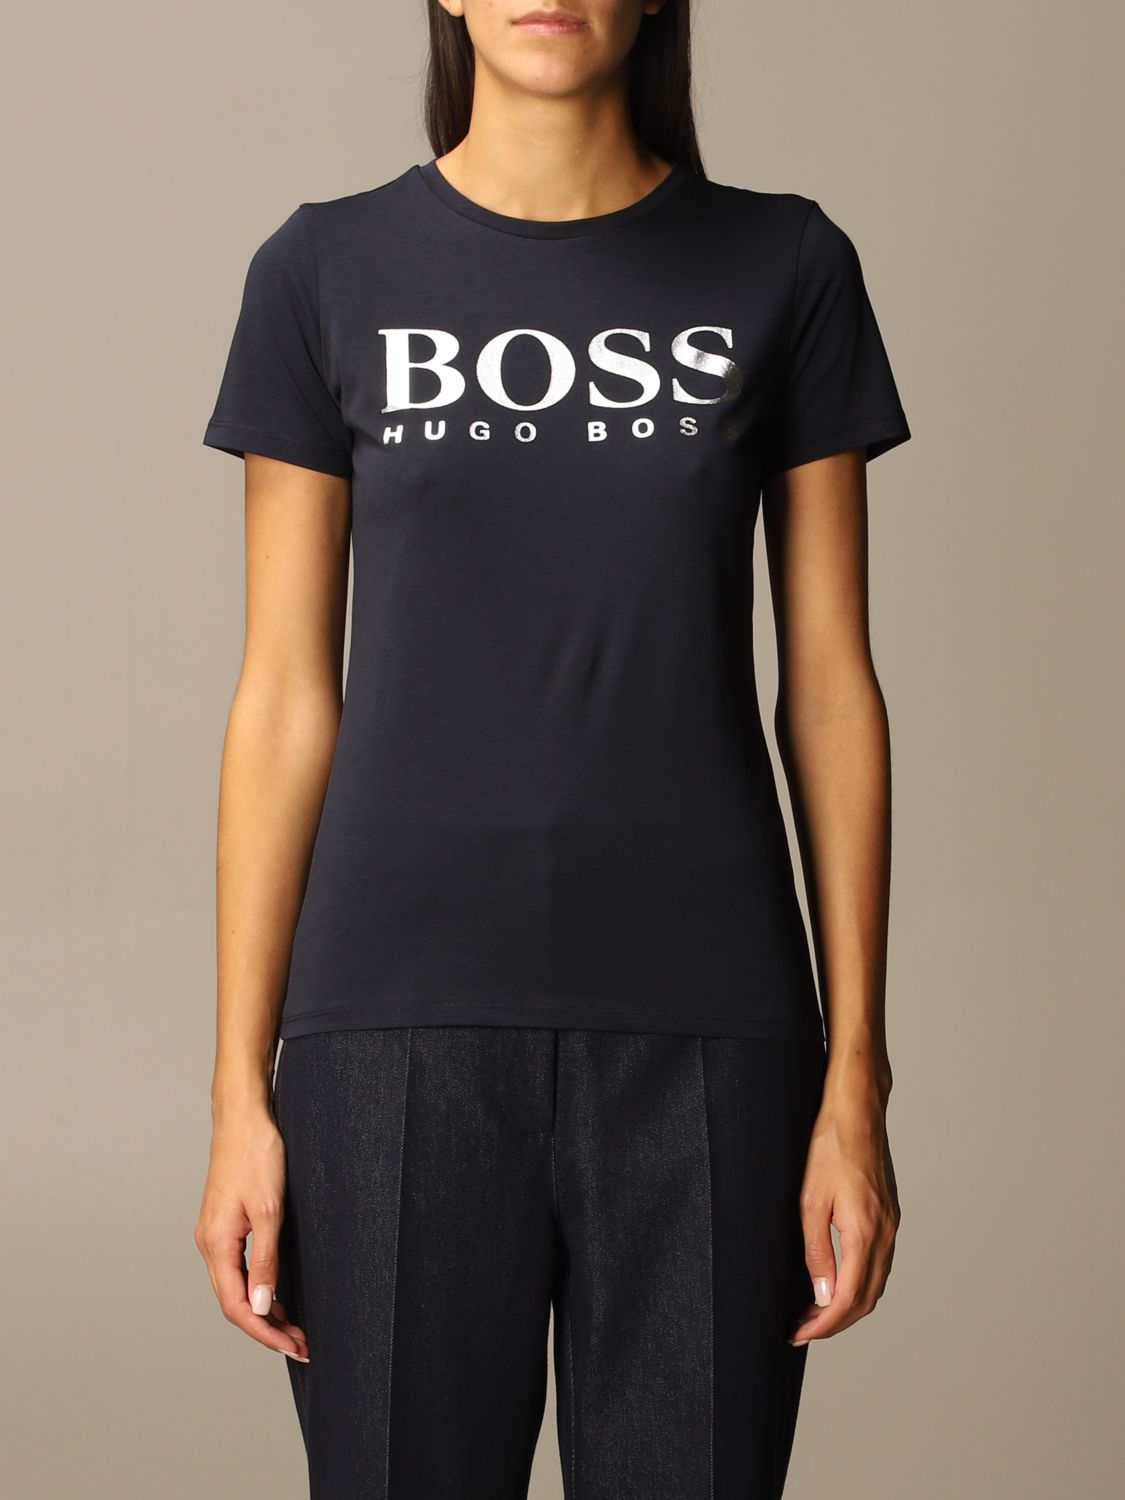 hugo boss woman t shirt